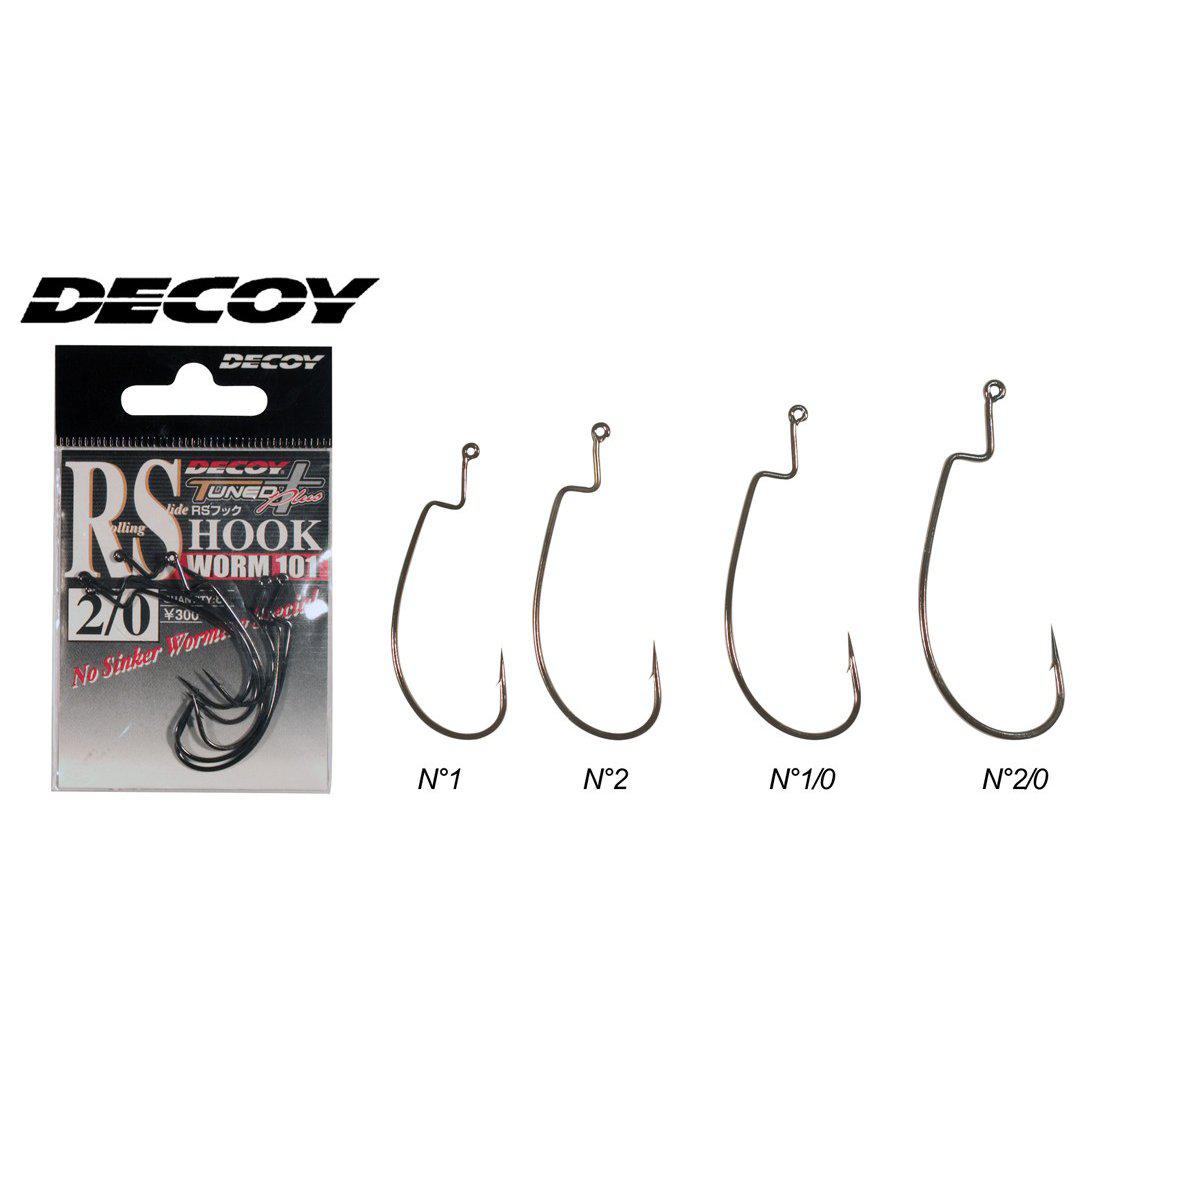 Decoy RS Hook Worm101